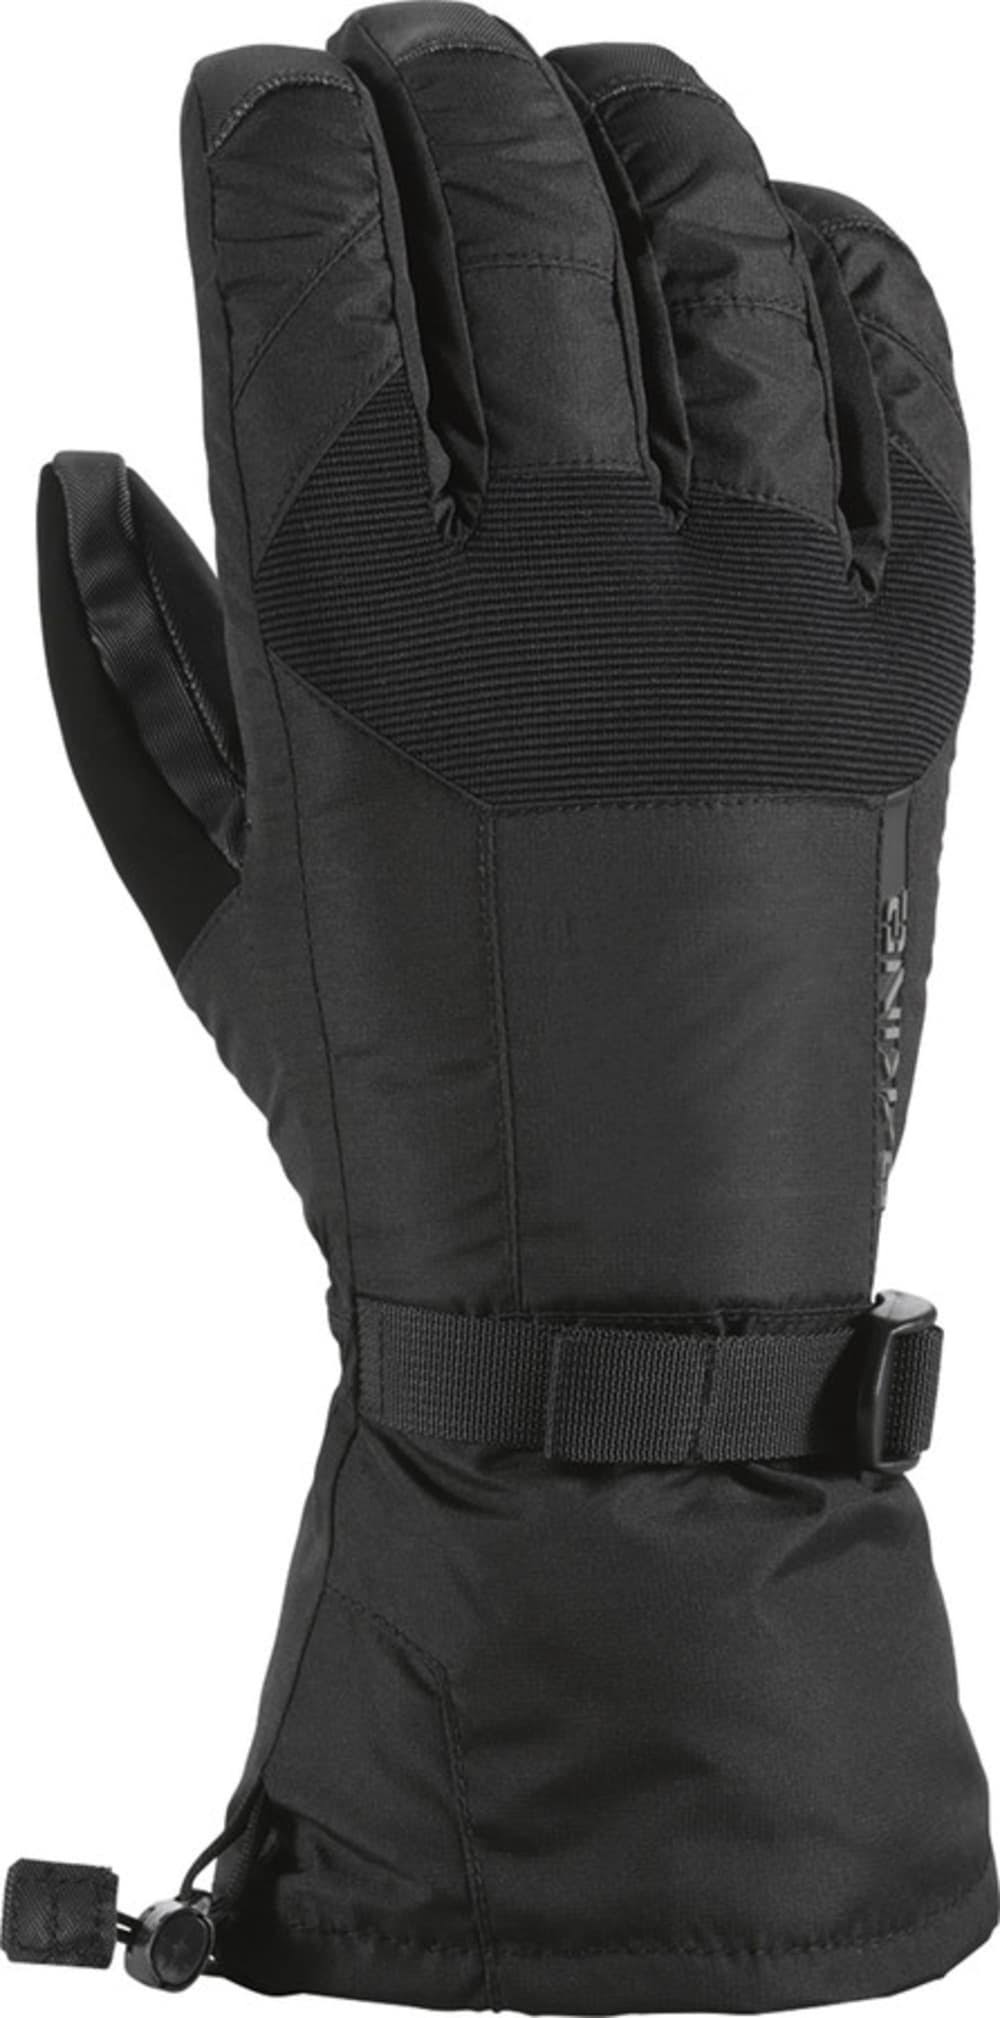 Dakine Scout Glove - Black, Large